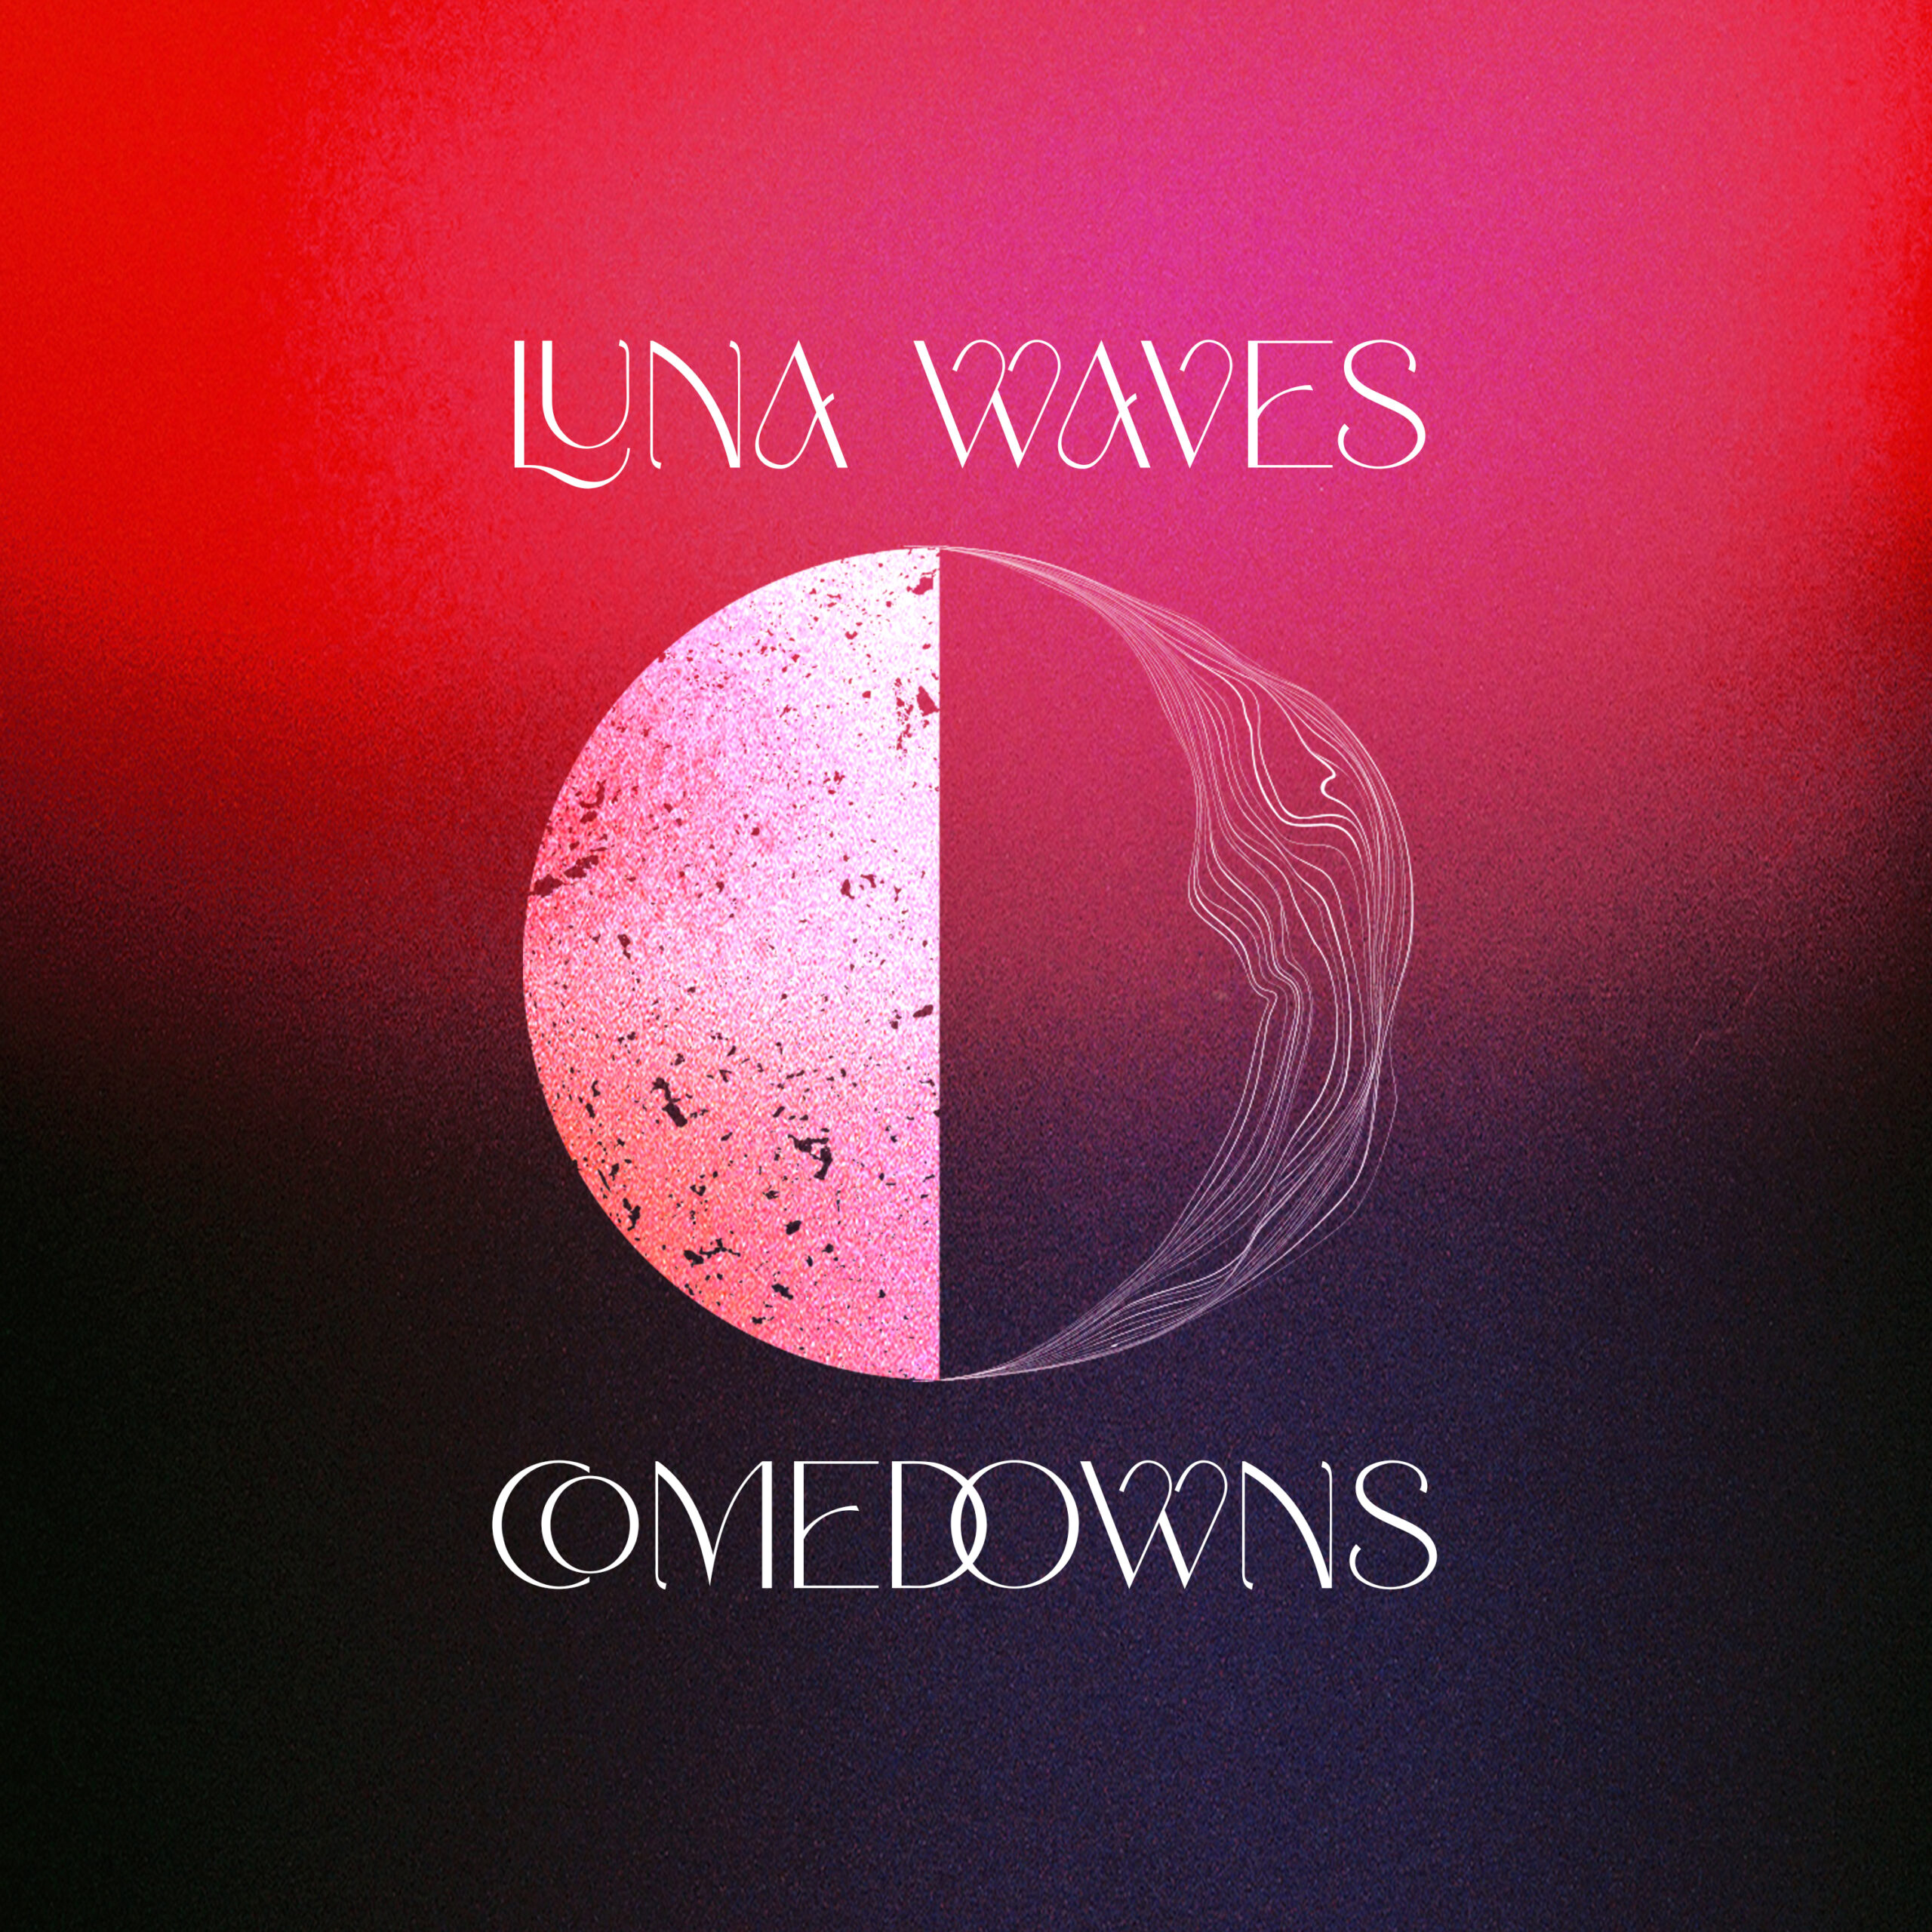 Luna Waves – “Comedowns”